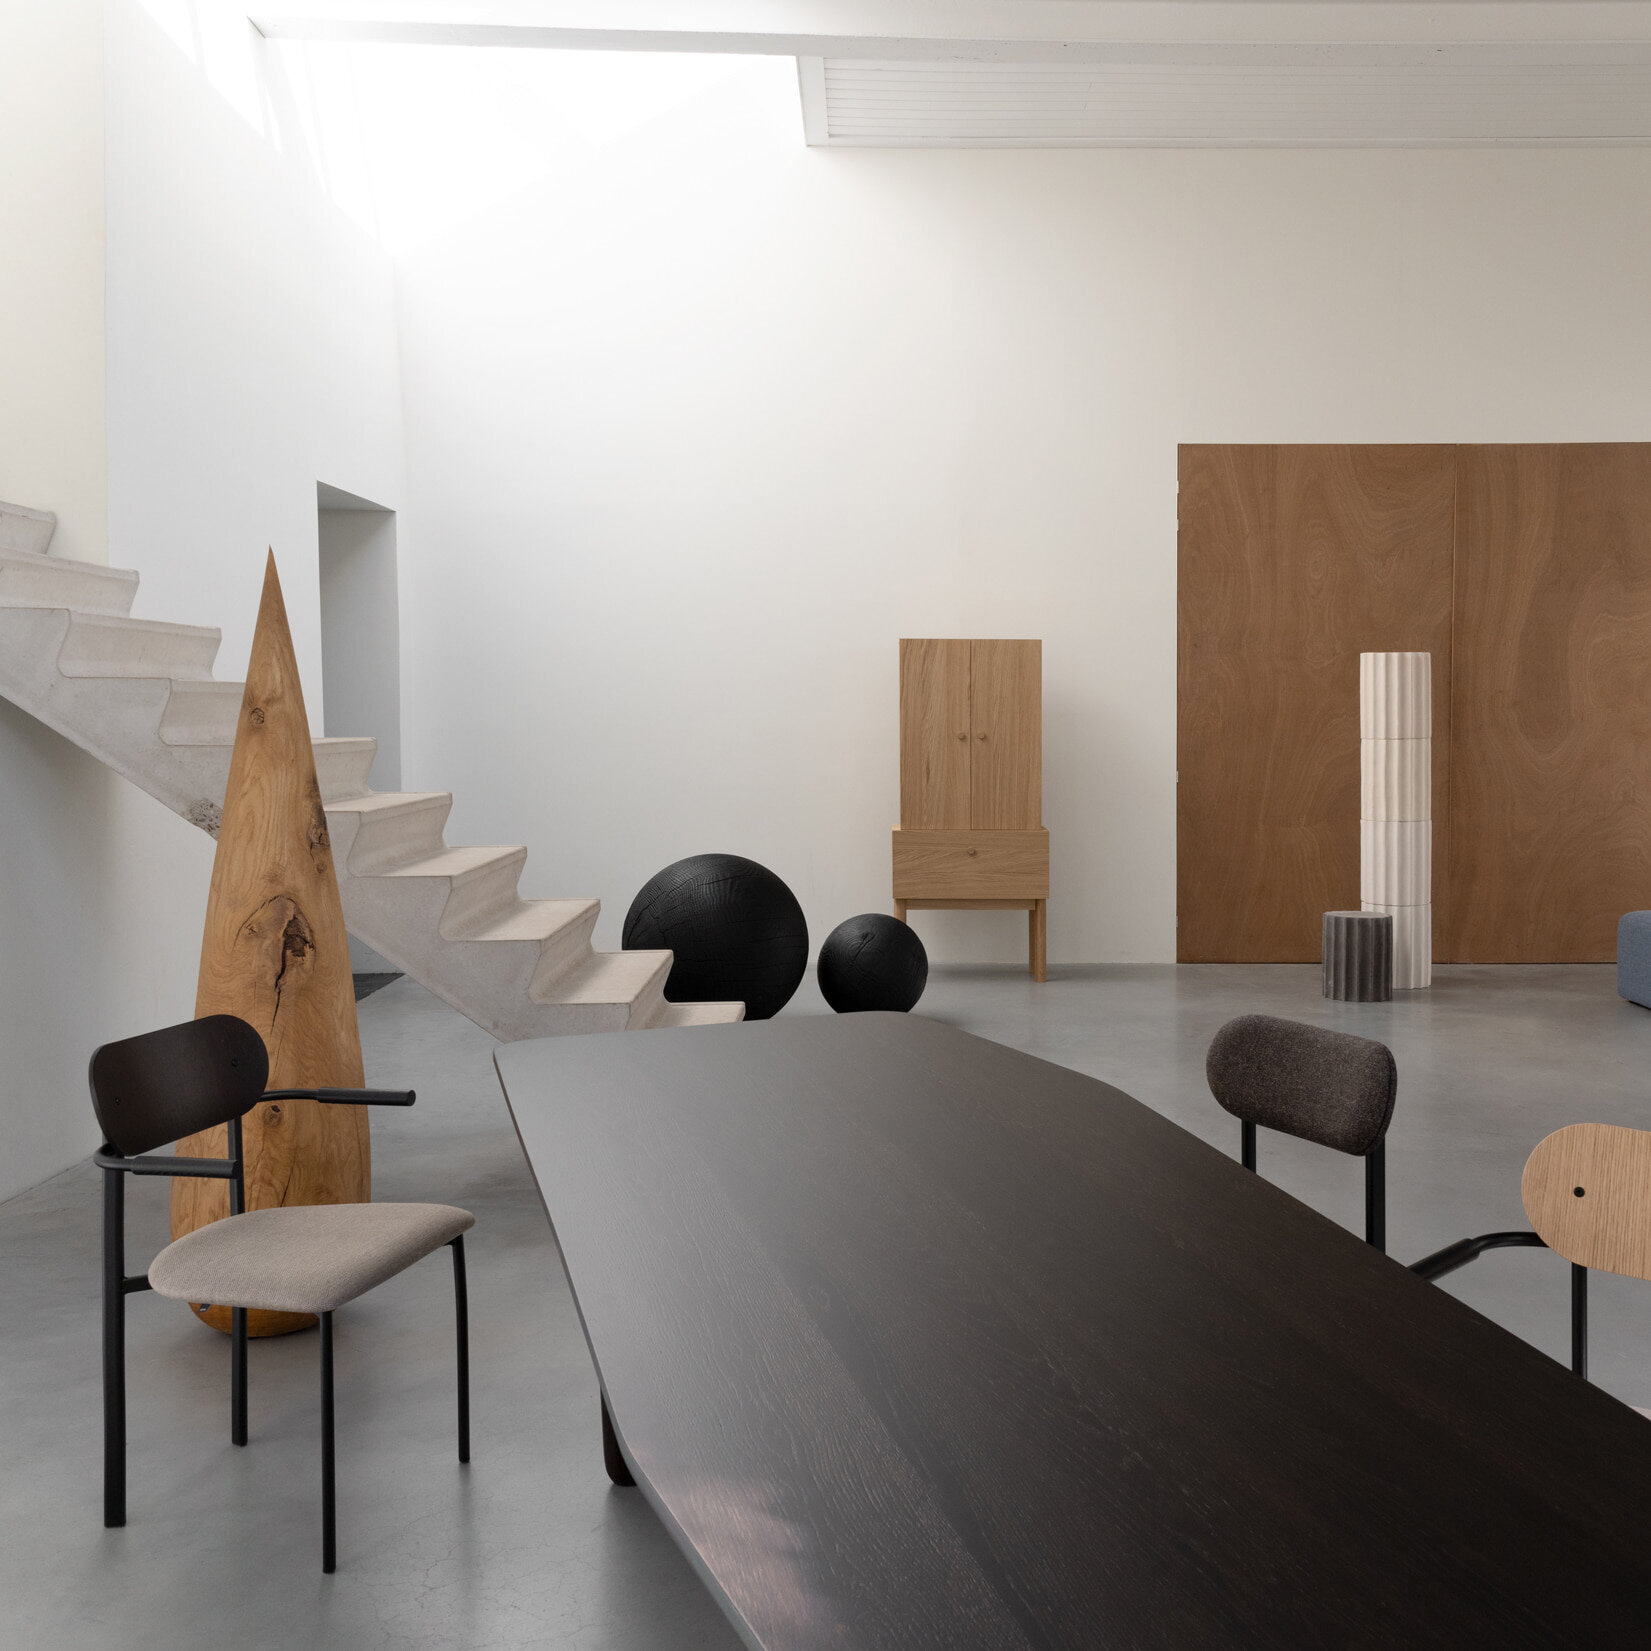 Design modern dining chair | Oblique Dining Chair with Armrest Beige regain natural01 | Studio HENK| 